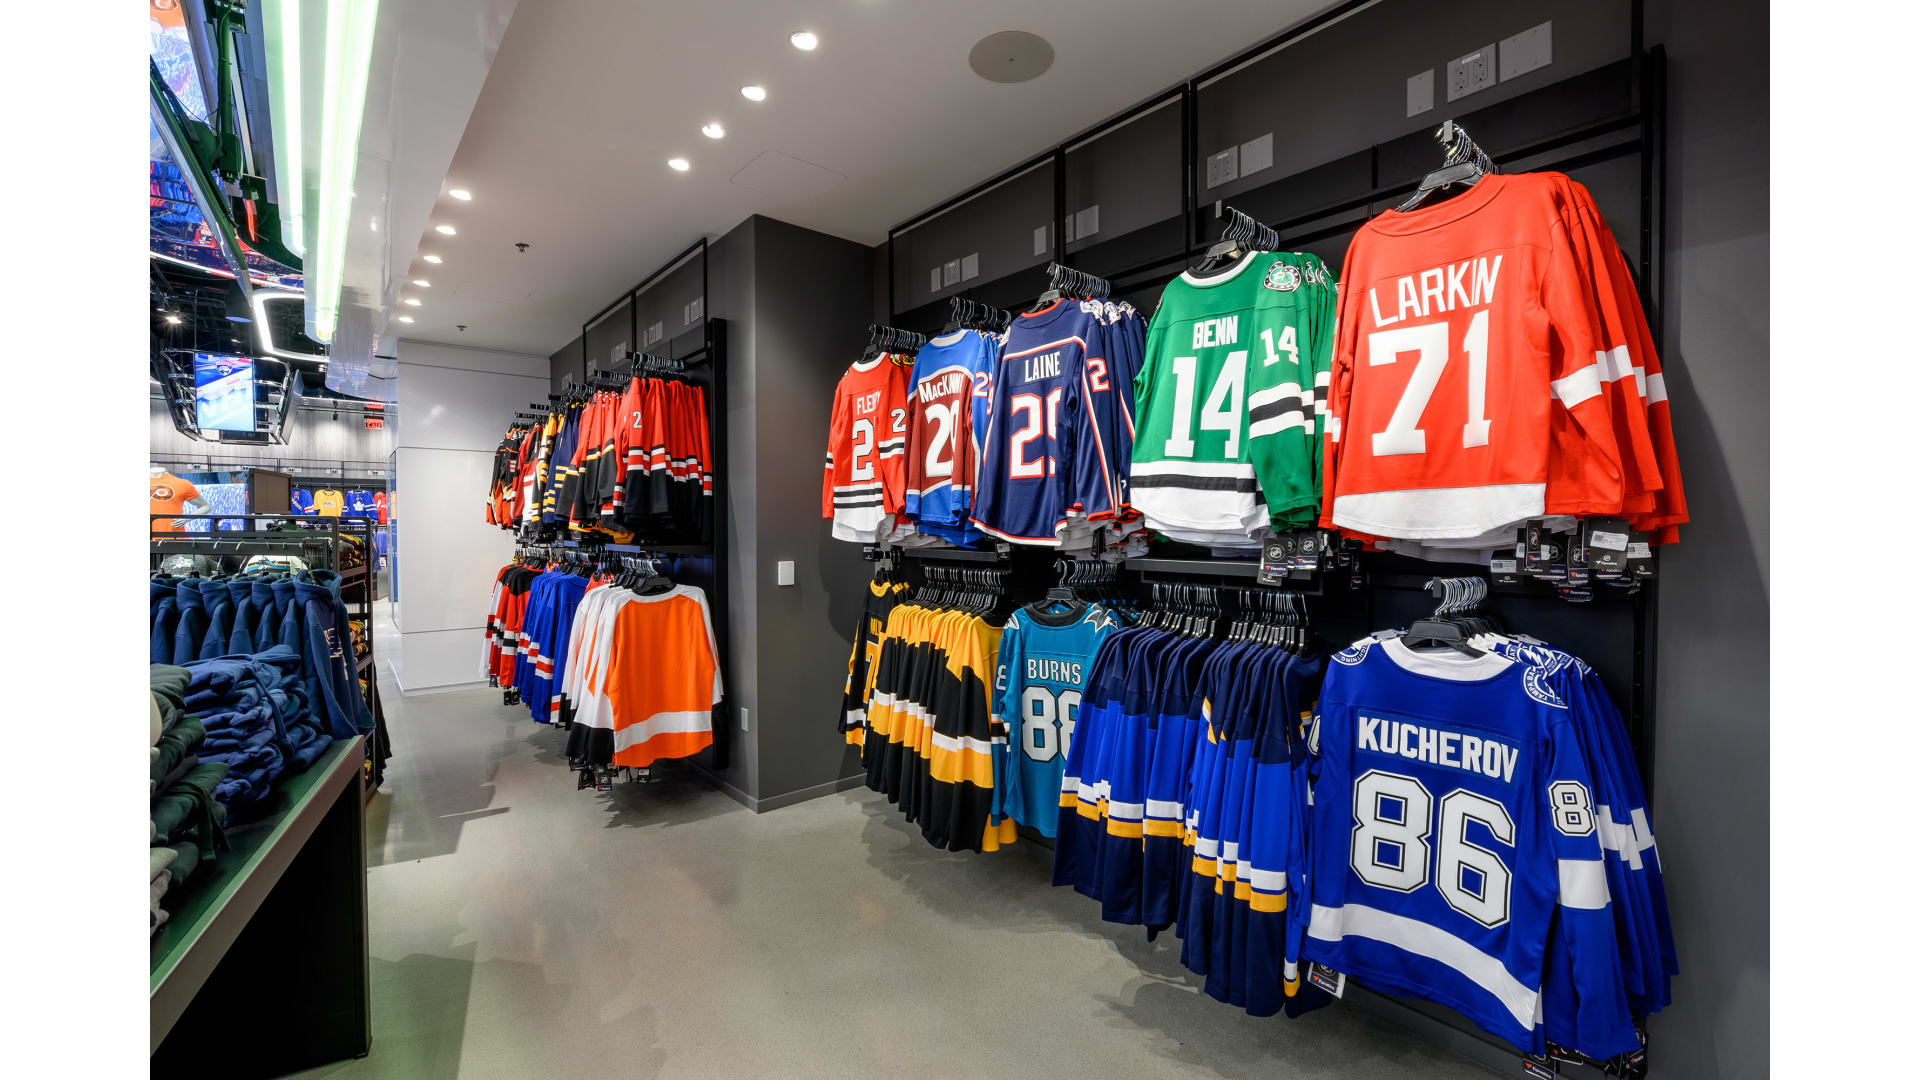 NHL Shop New York City